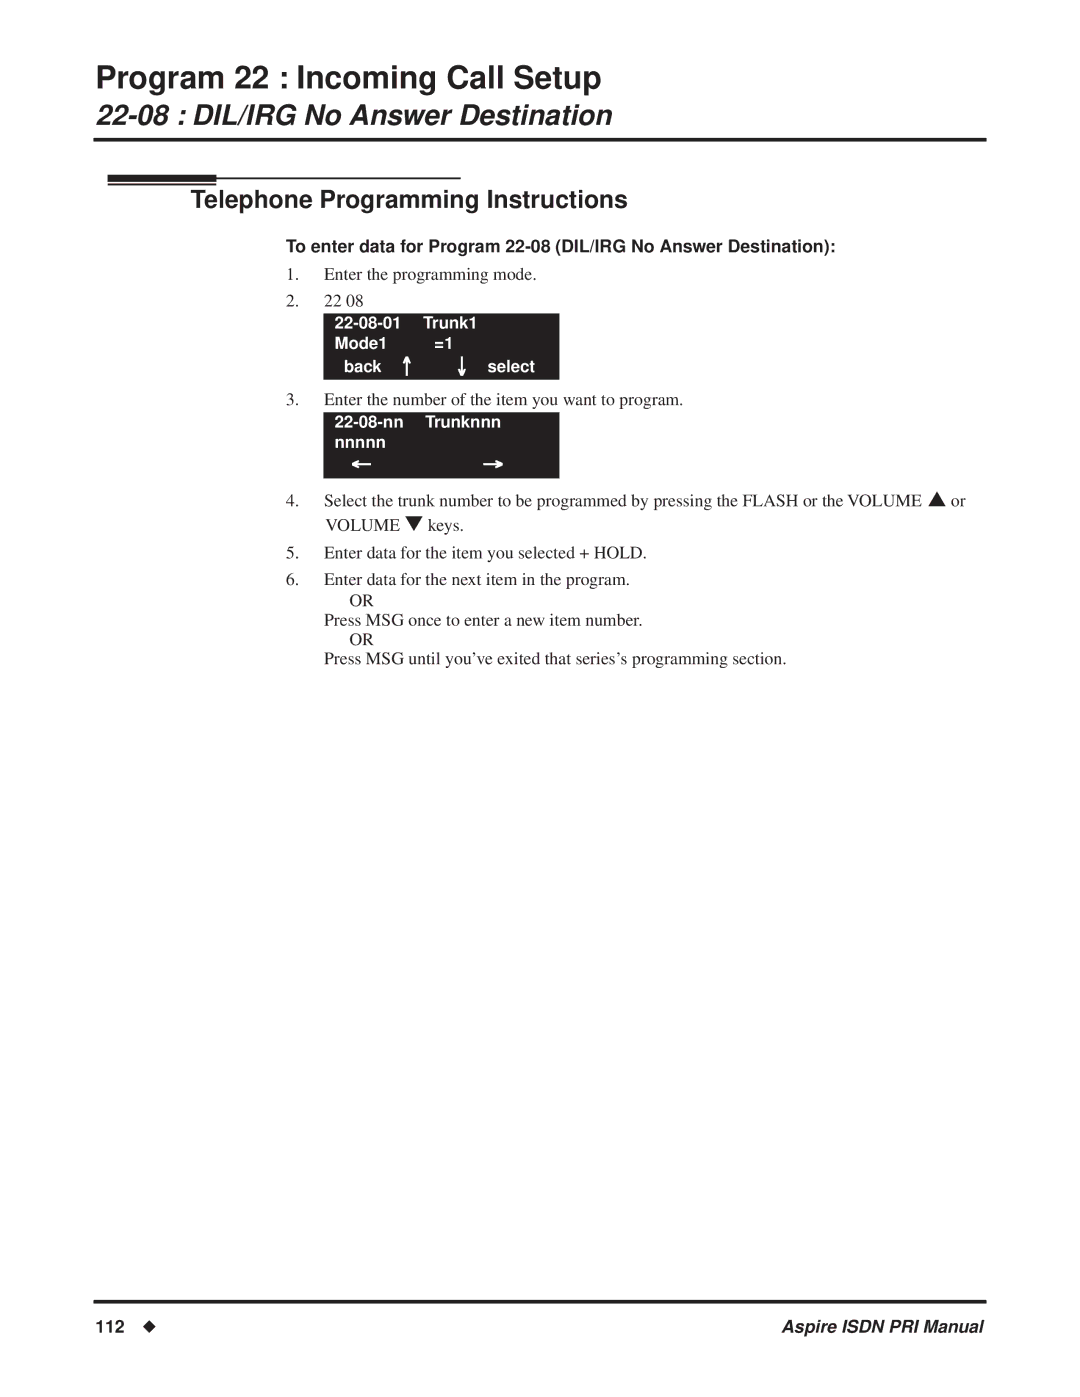 NEC ISDN-PRI manual 112 